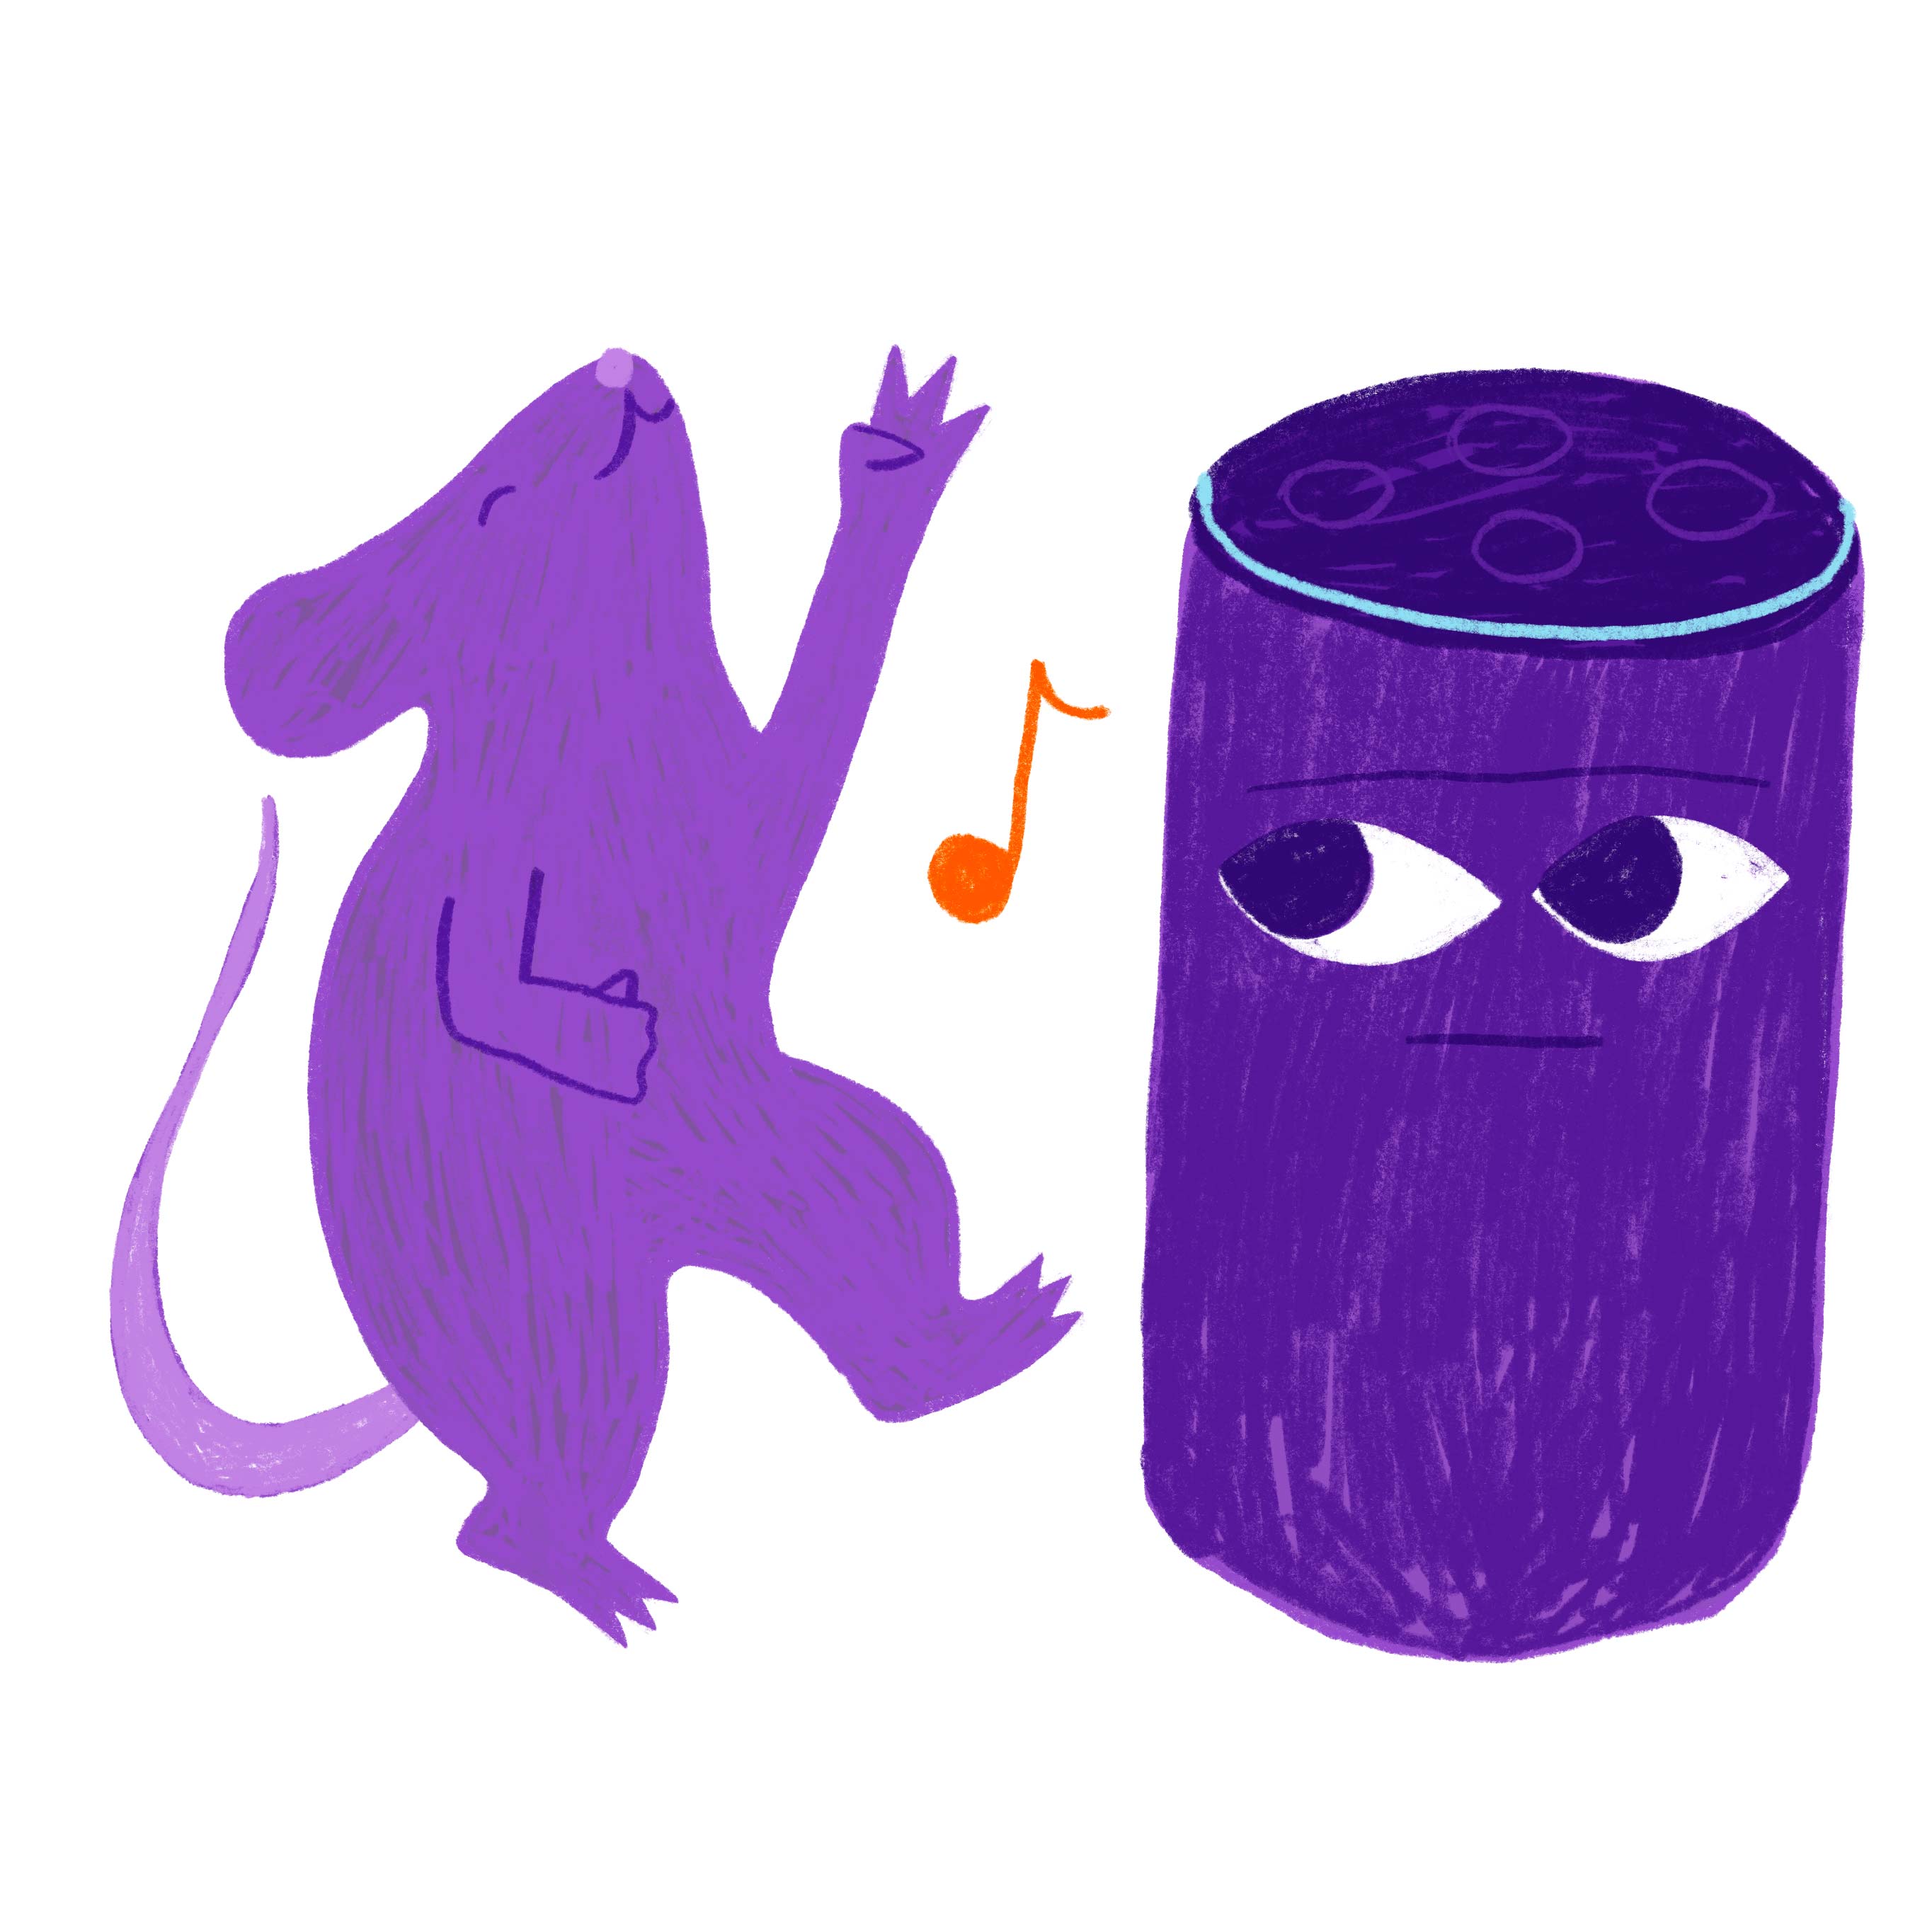 A purple rat plays air guitar while an Amazon Echo listens.